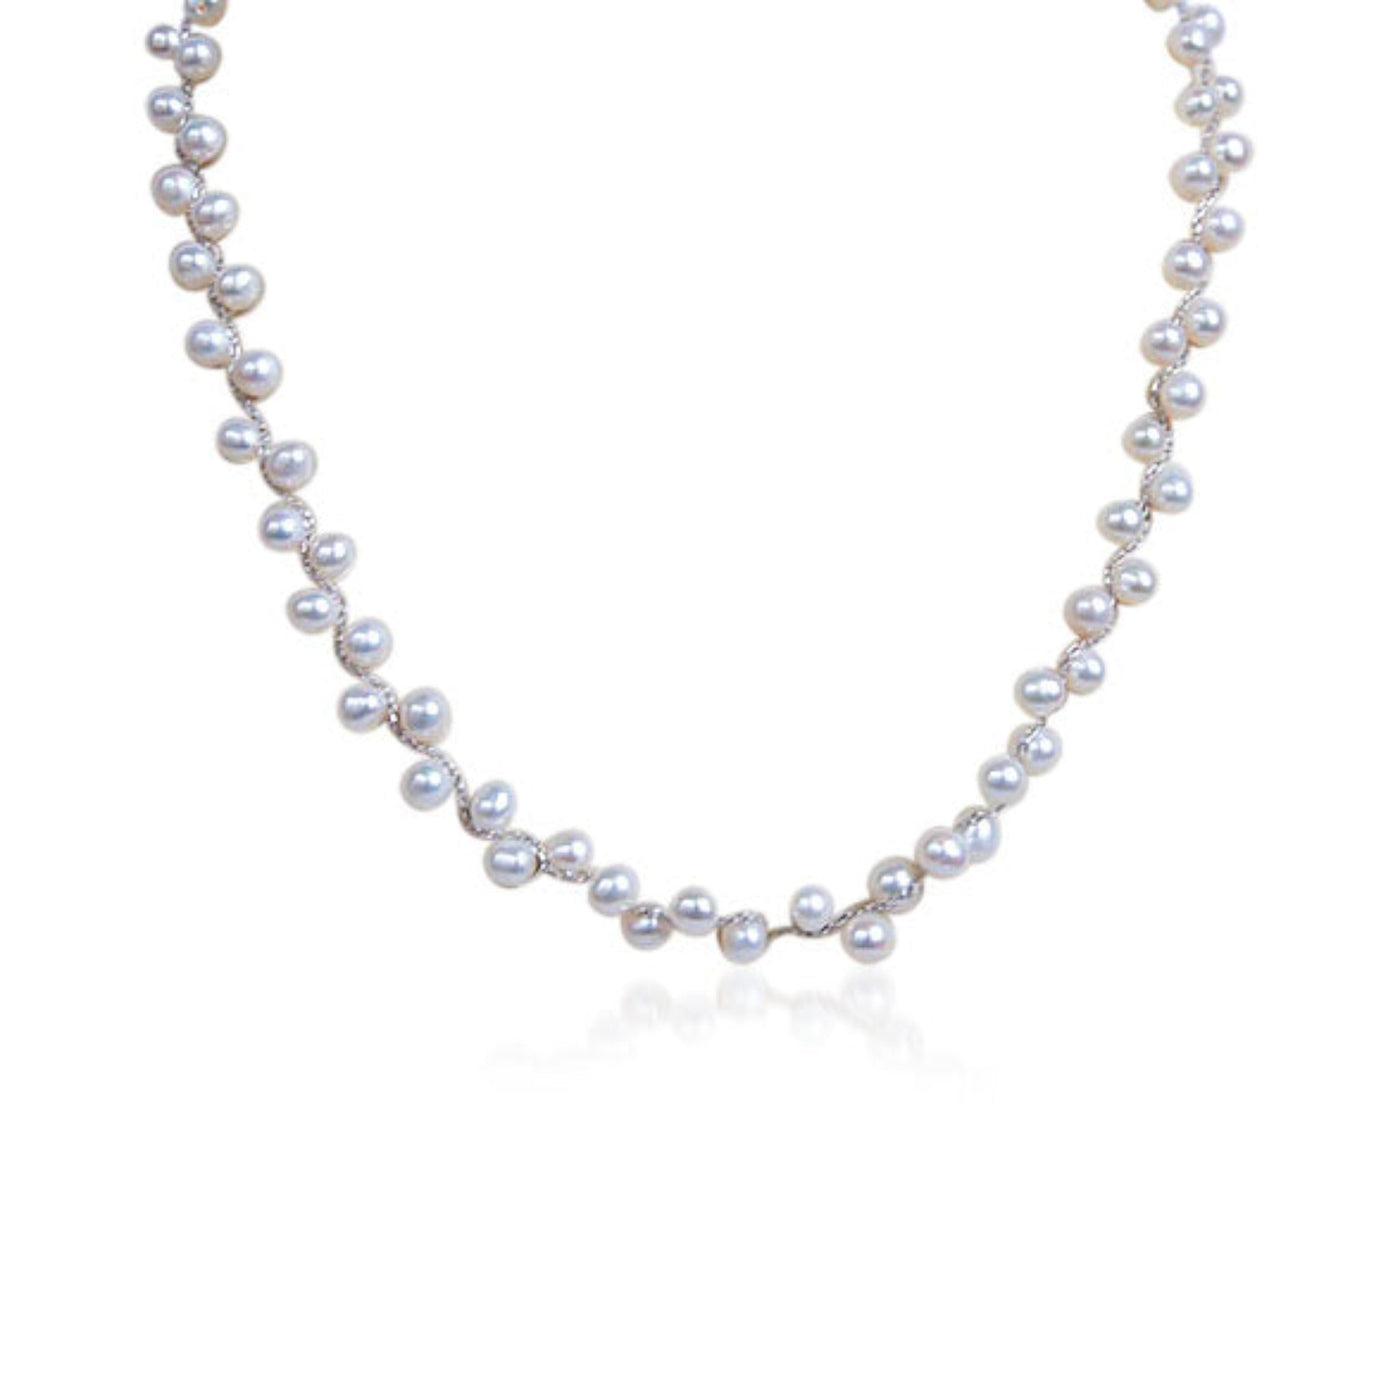 Dancing Pearls Necklace - Capsul